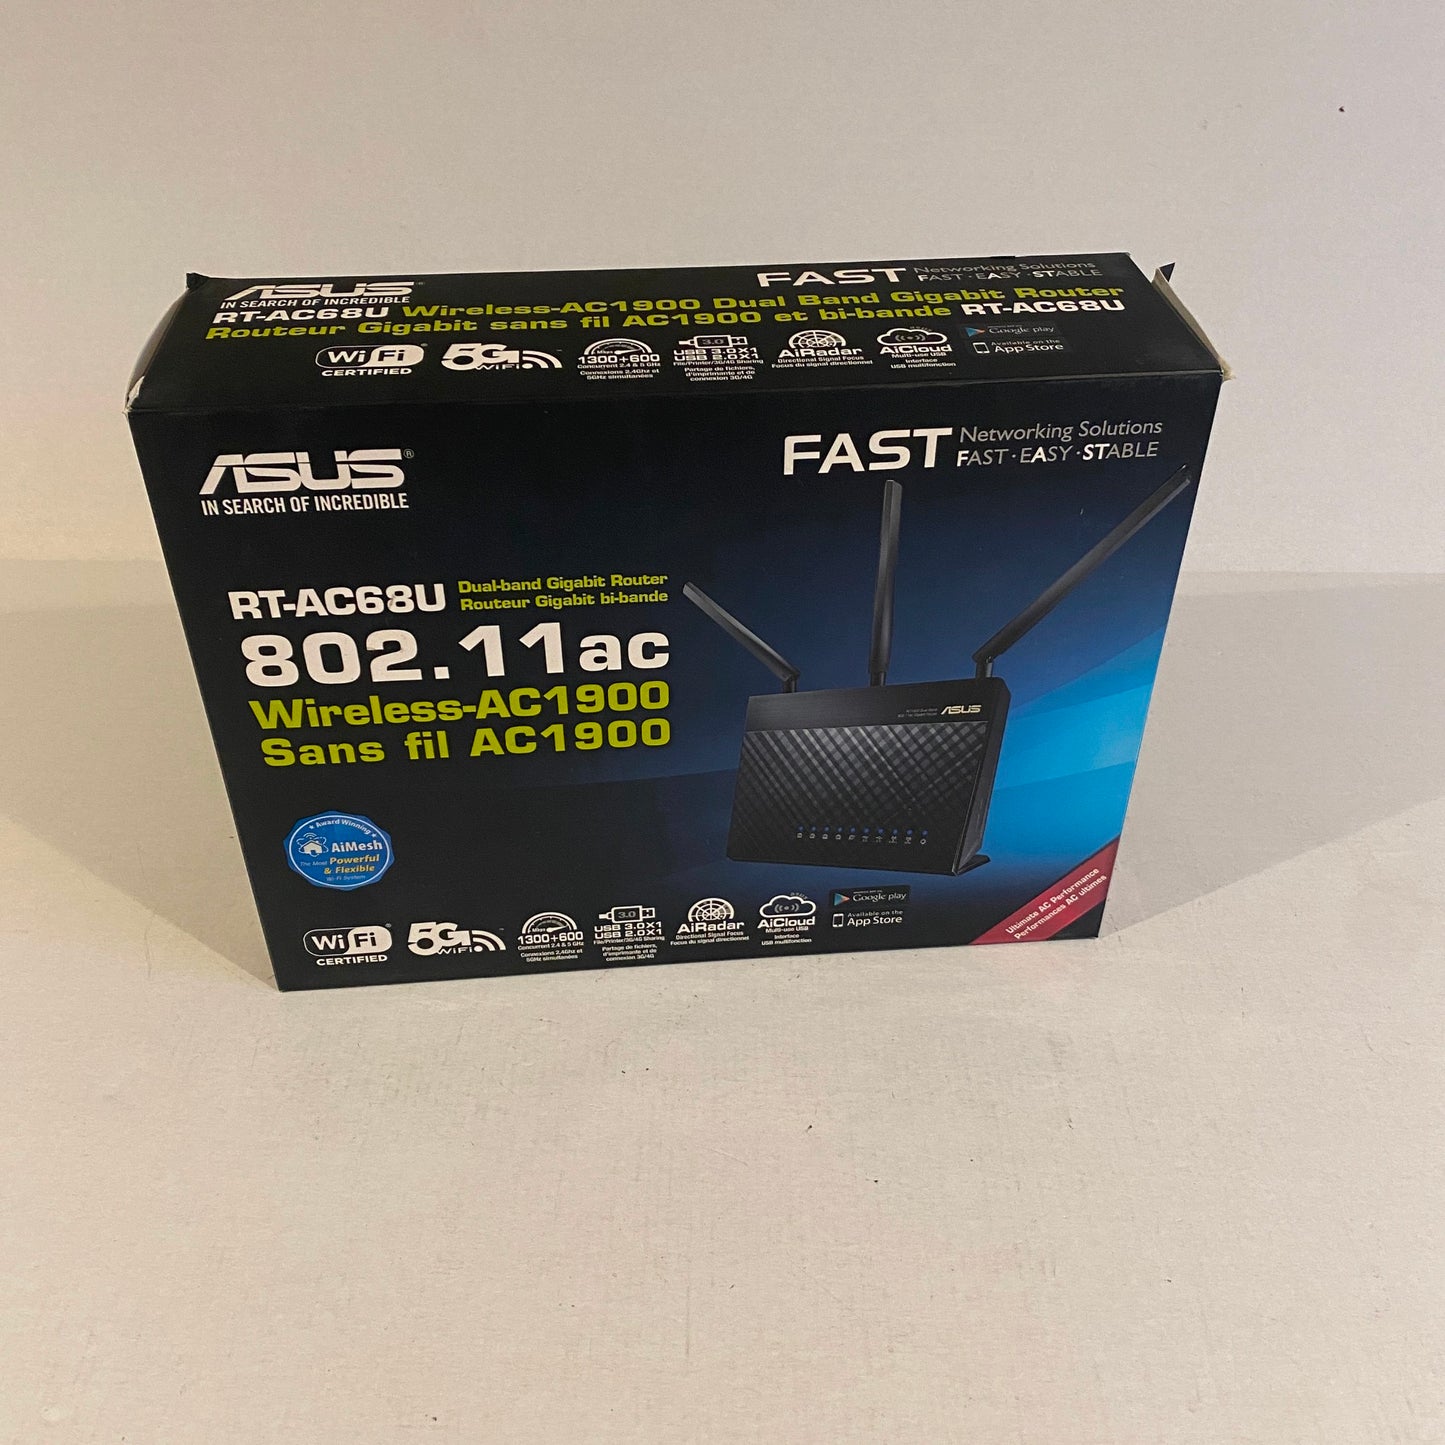 Asus AC-1900 Wireless Dual Band Gigabit Router - RT-AC68U